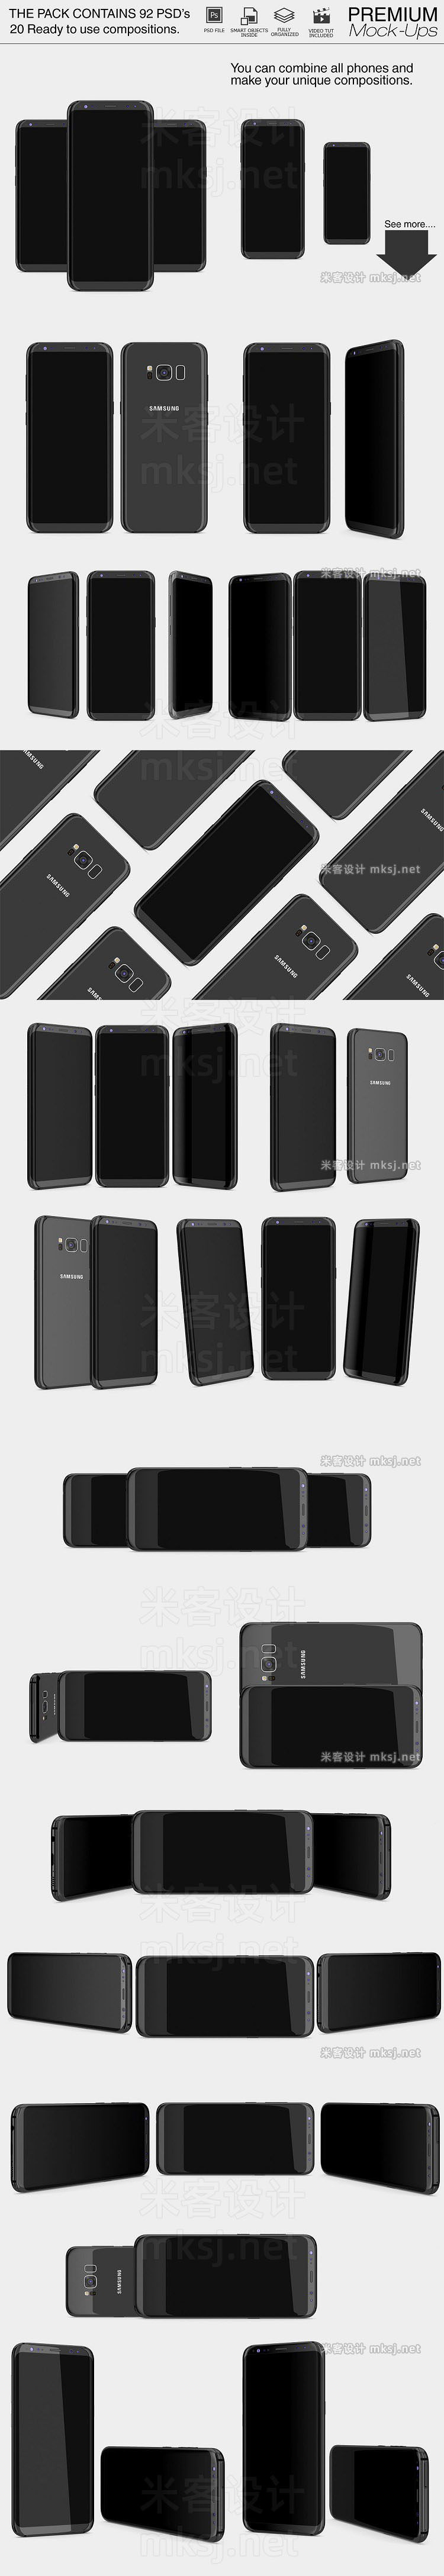 photoshop 三星手机 Samsung Galaxy S8 贴图样机素材